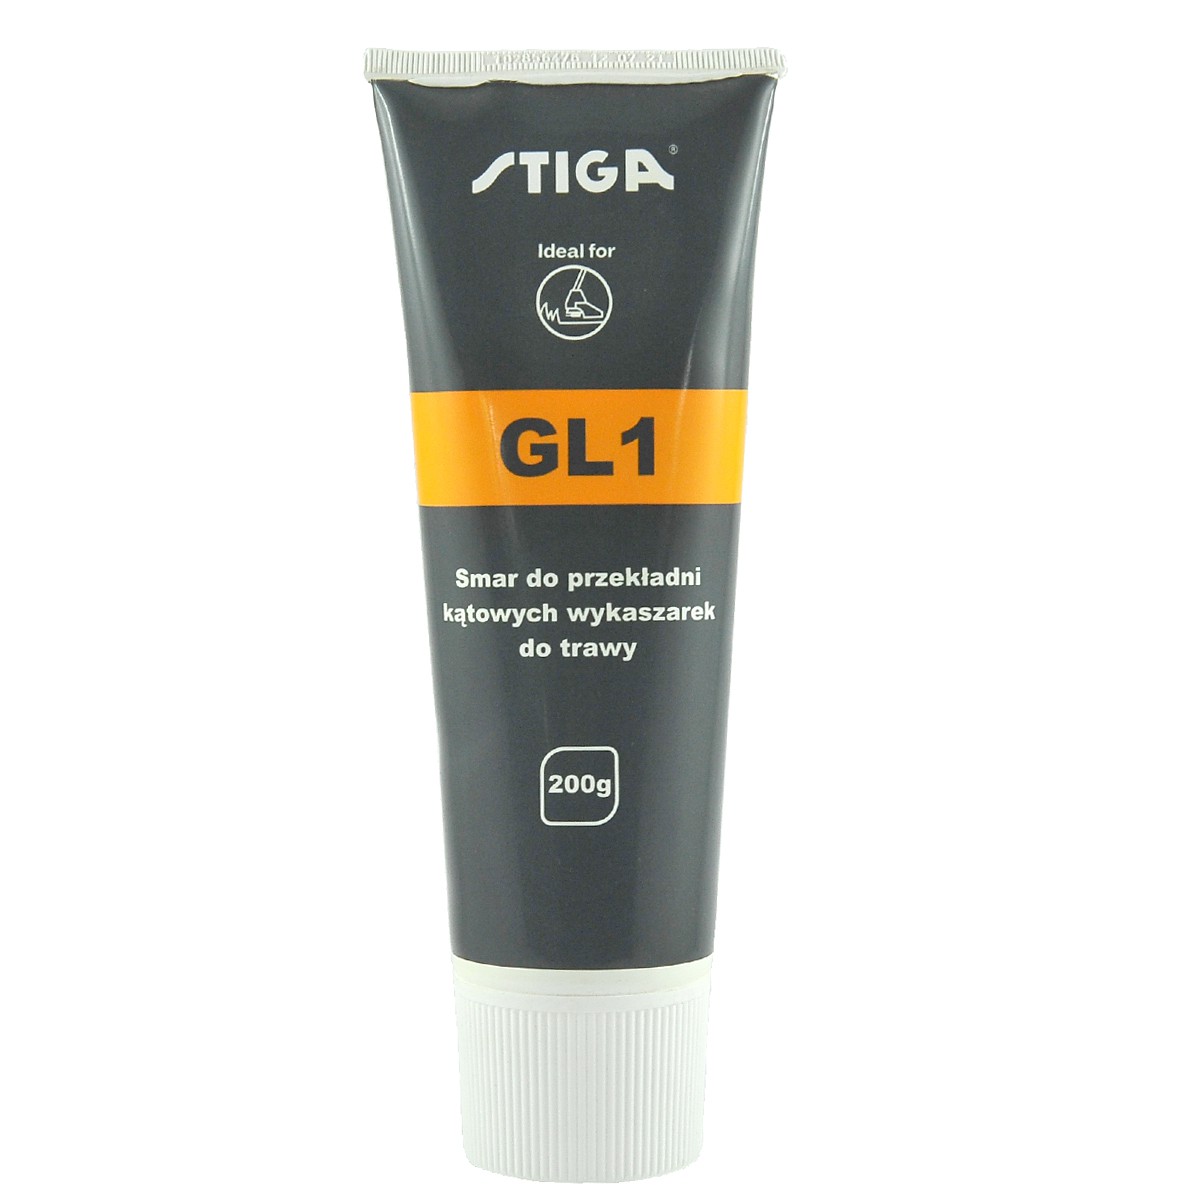 Stiga GL1 / 200 G / 99-9015-02 grease